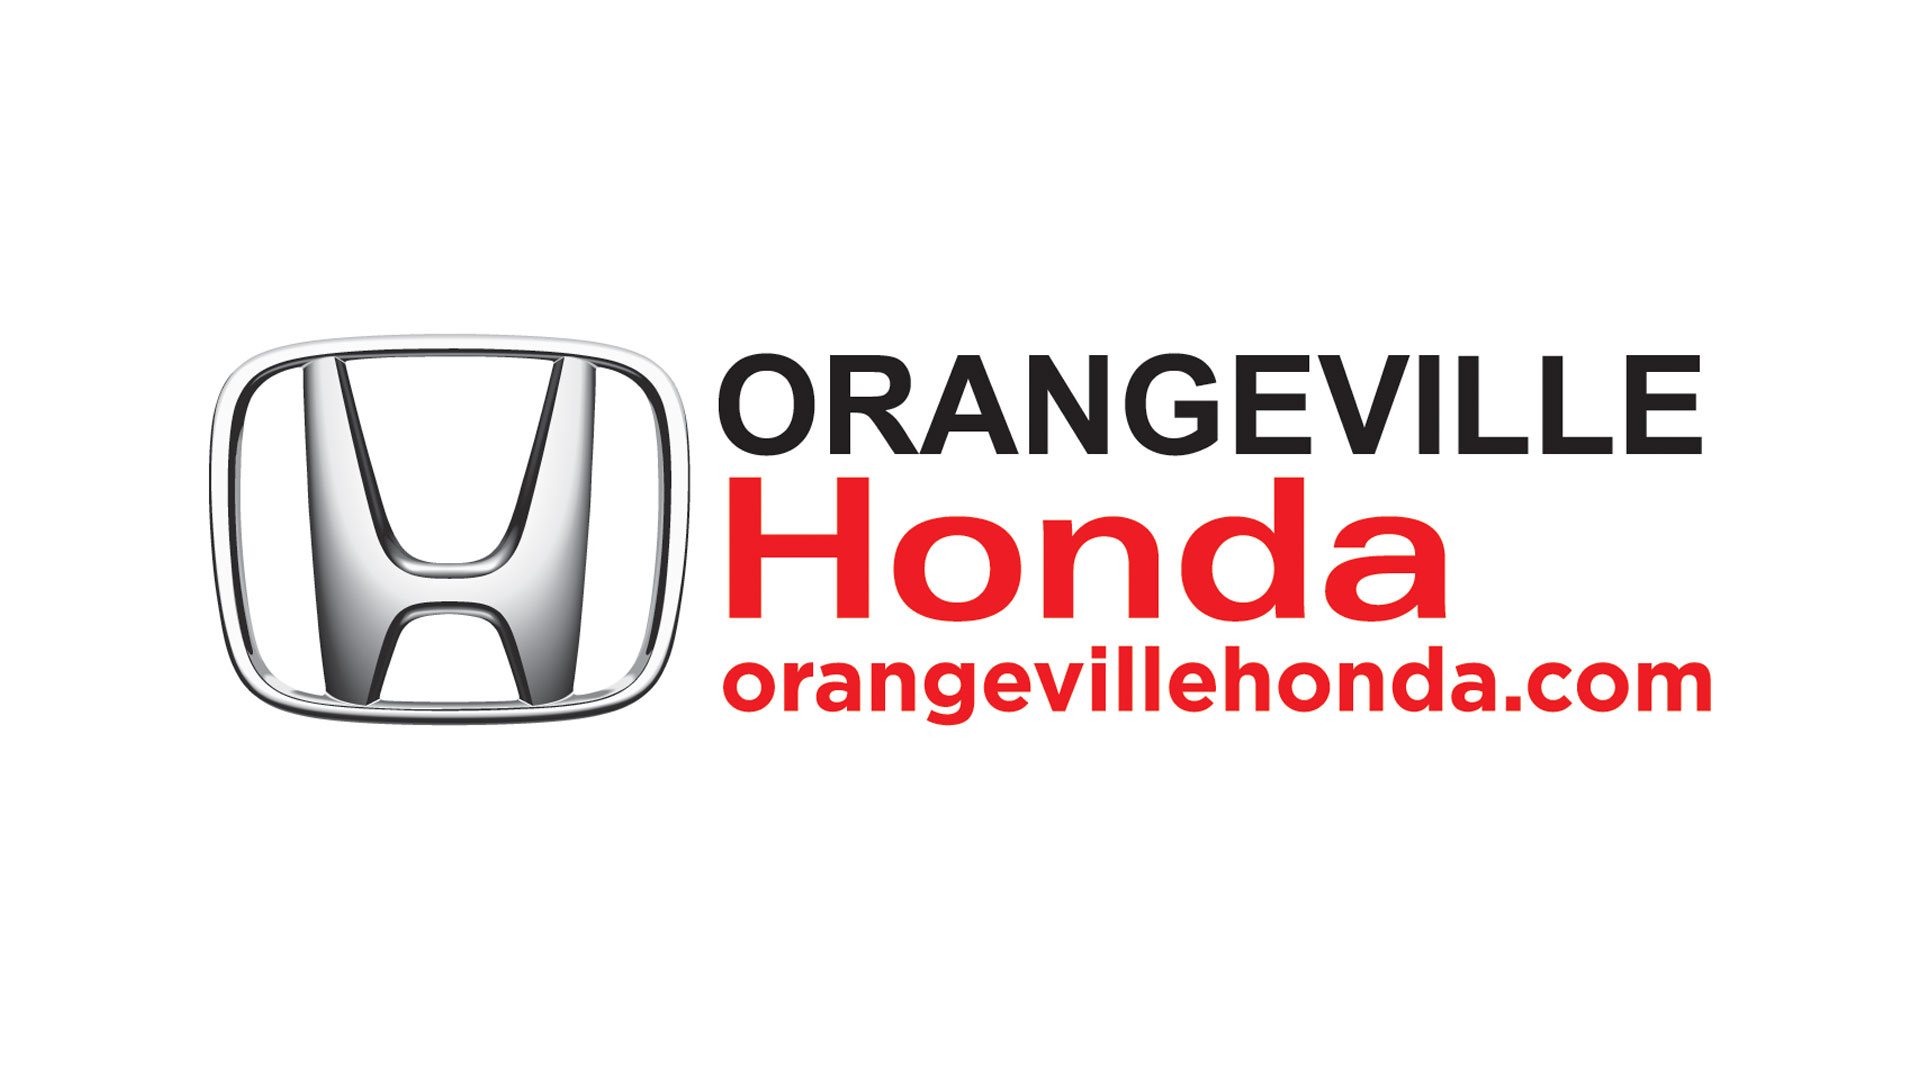 Orangeville Honda logo